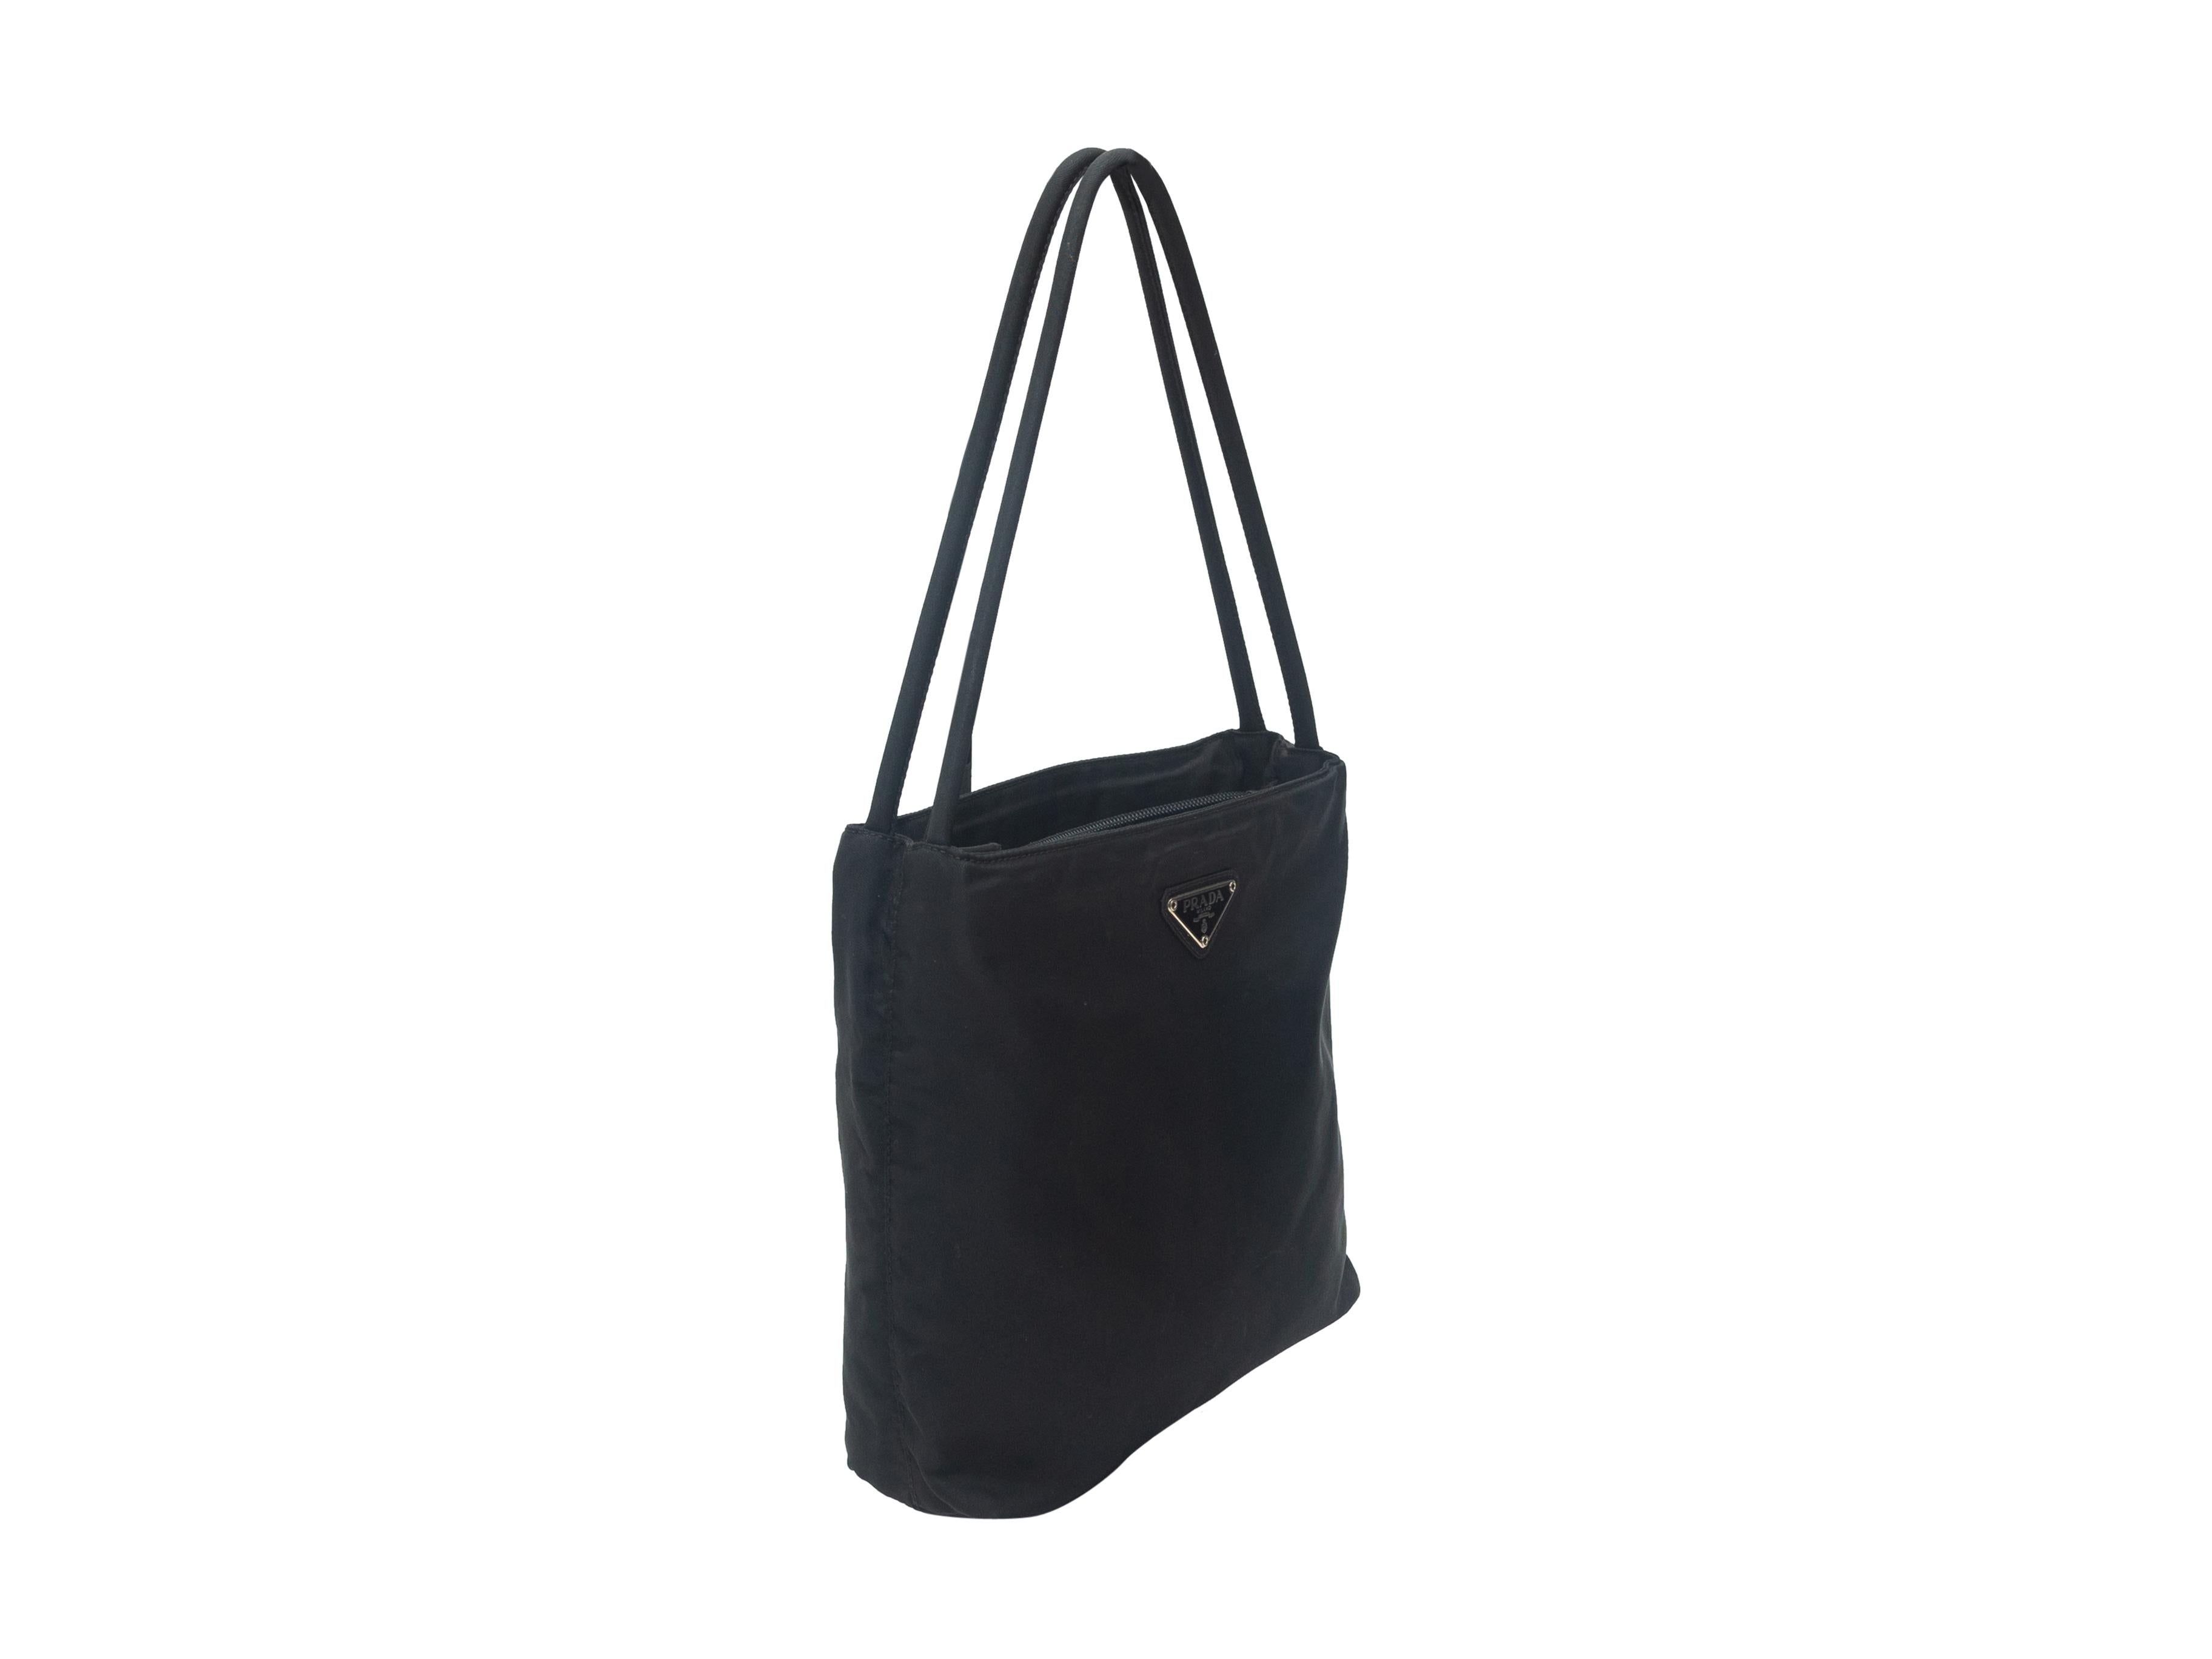 Product details: Black nylon small shoulder bag by Prada. Interior zip pocket. Dual shoulder straps. 9